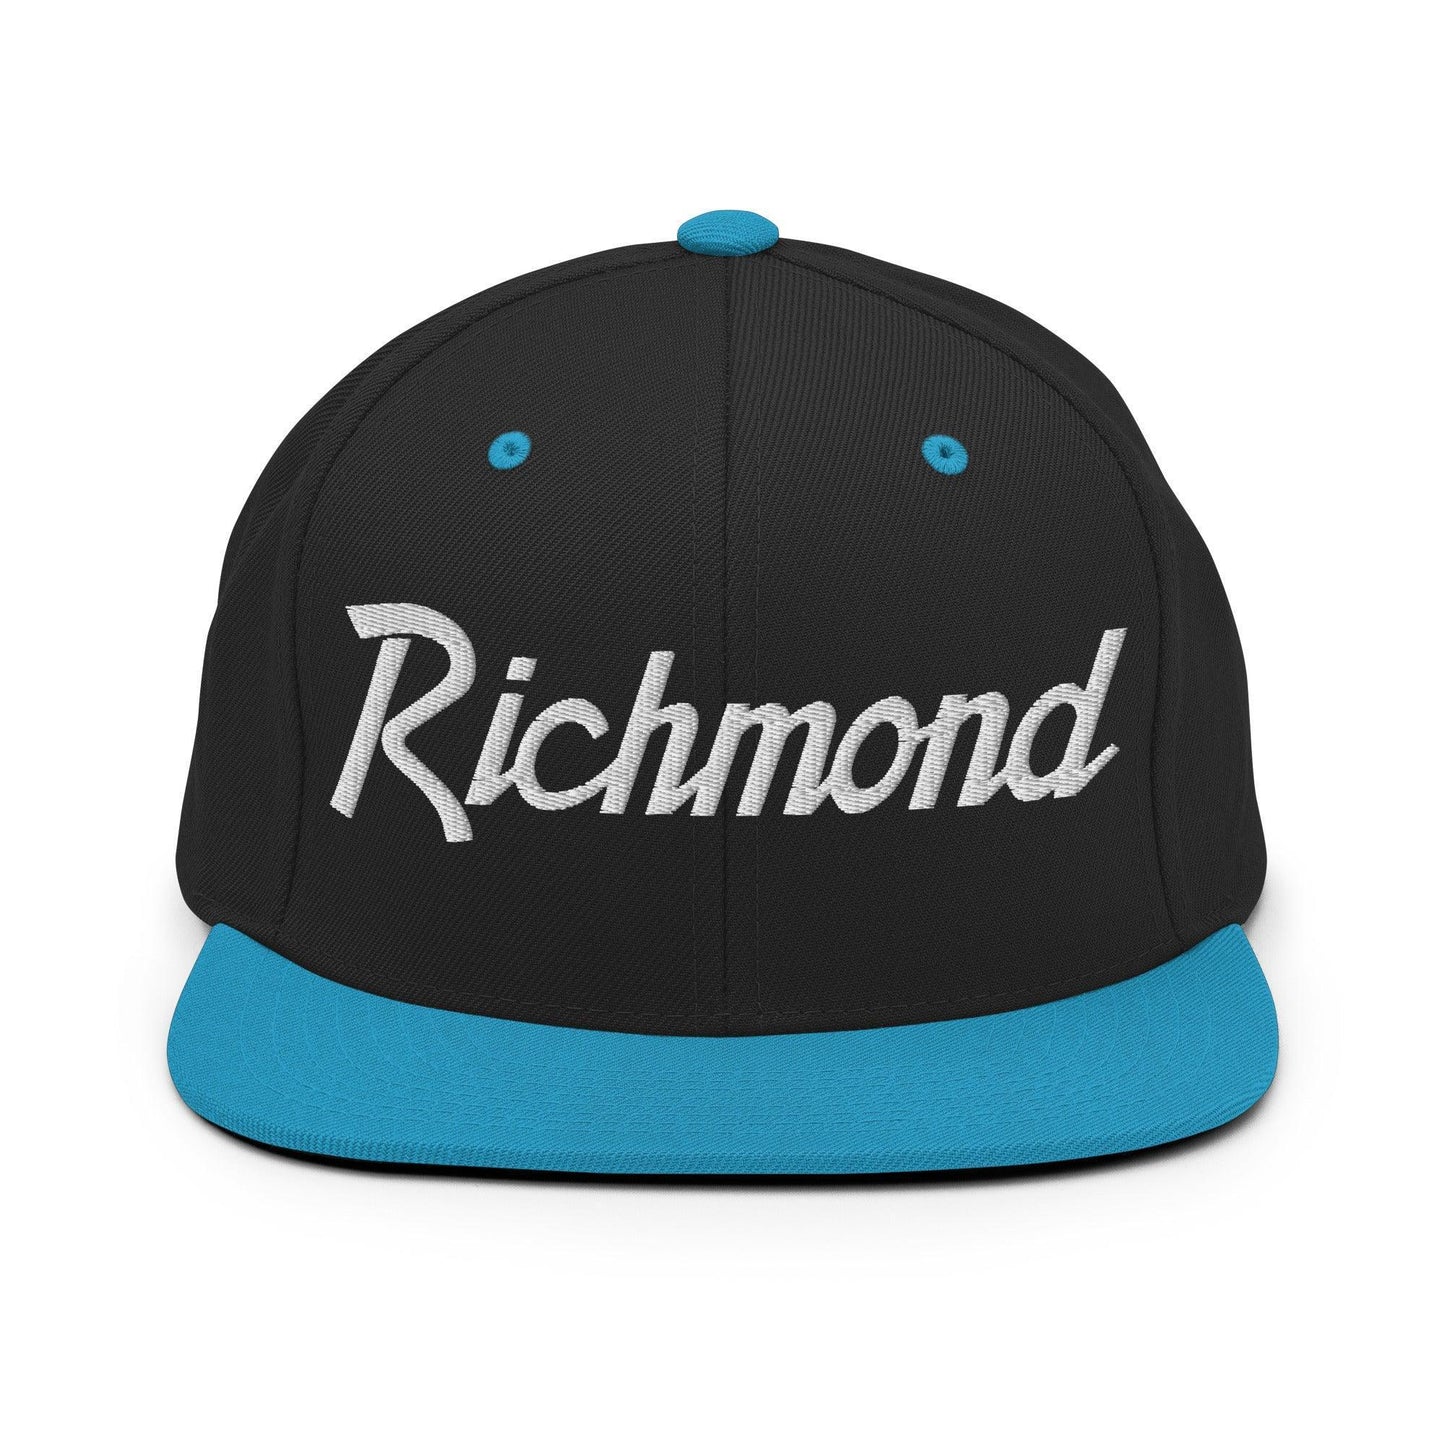 Richmond Script Snapback Hat Black Teal